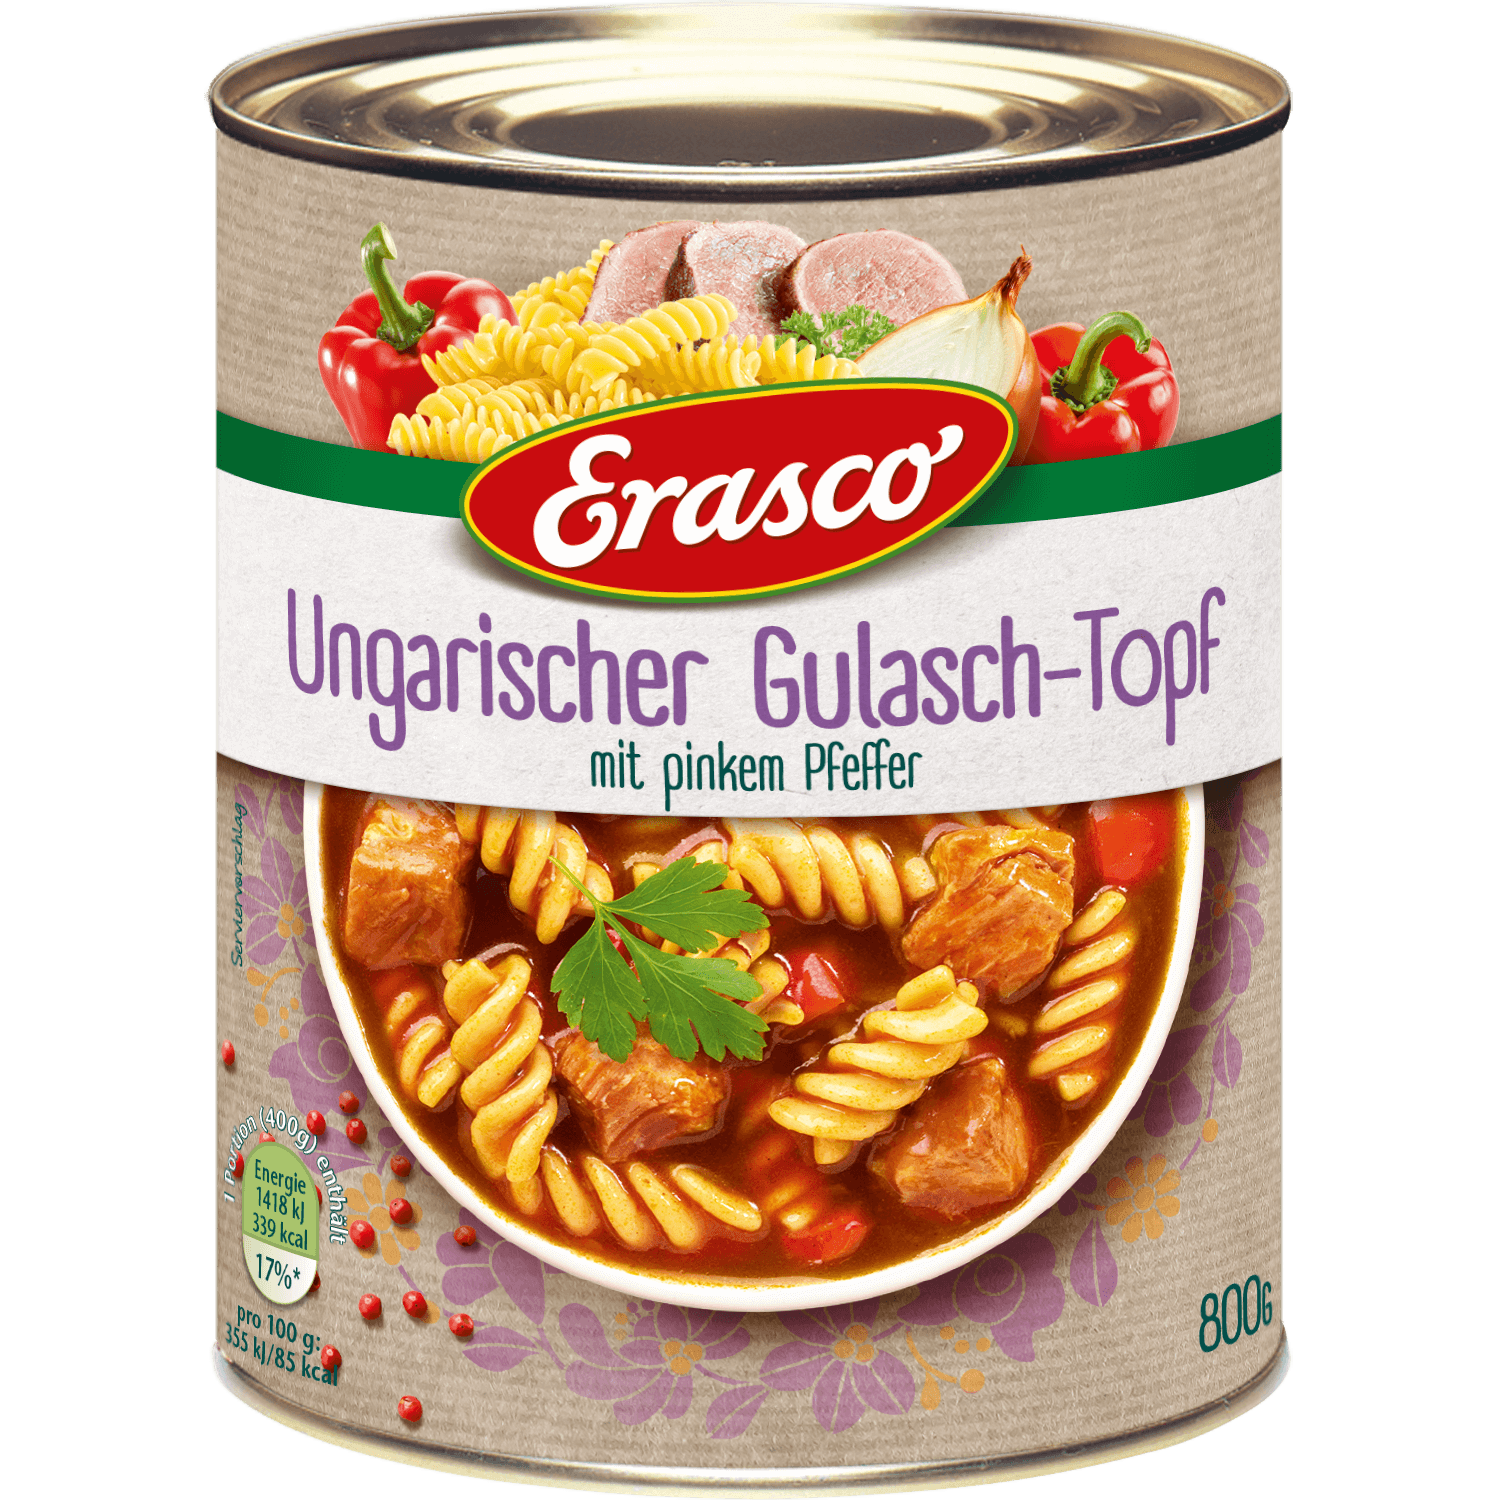 Erasco – Hungarian Gulash Pot – 800 g can / Ungarischer Gulaschtopf | German Deli Ph